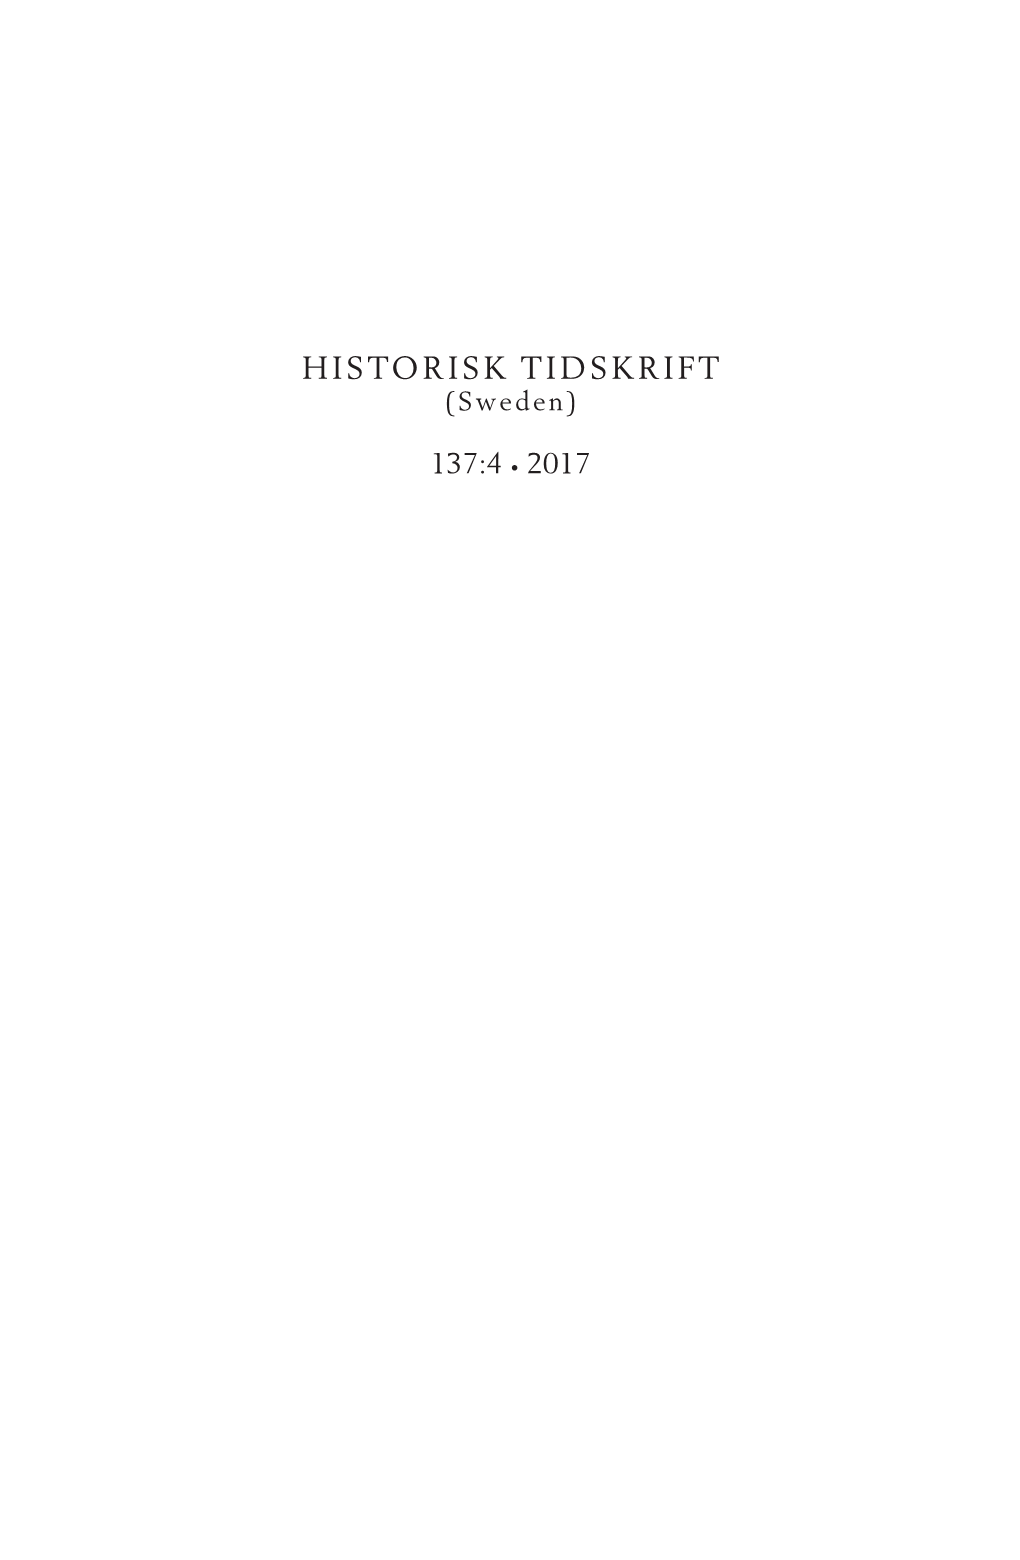 HISTORISK TIDSKRIFT (Sweden)